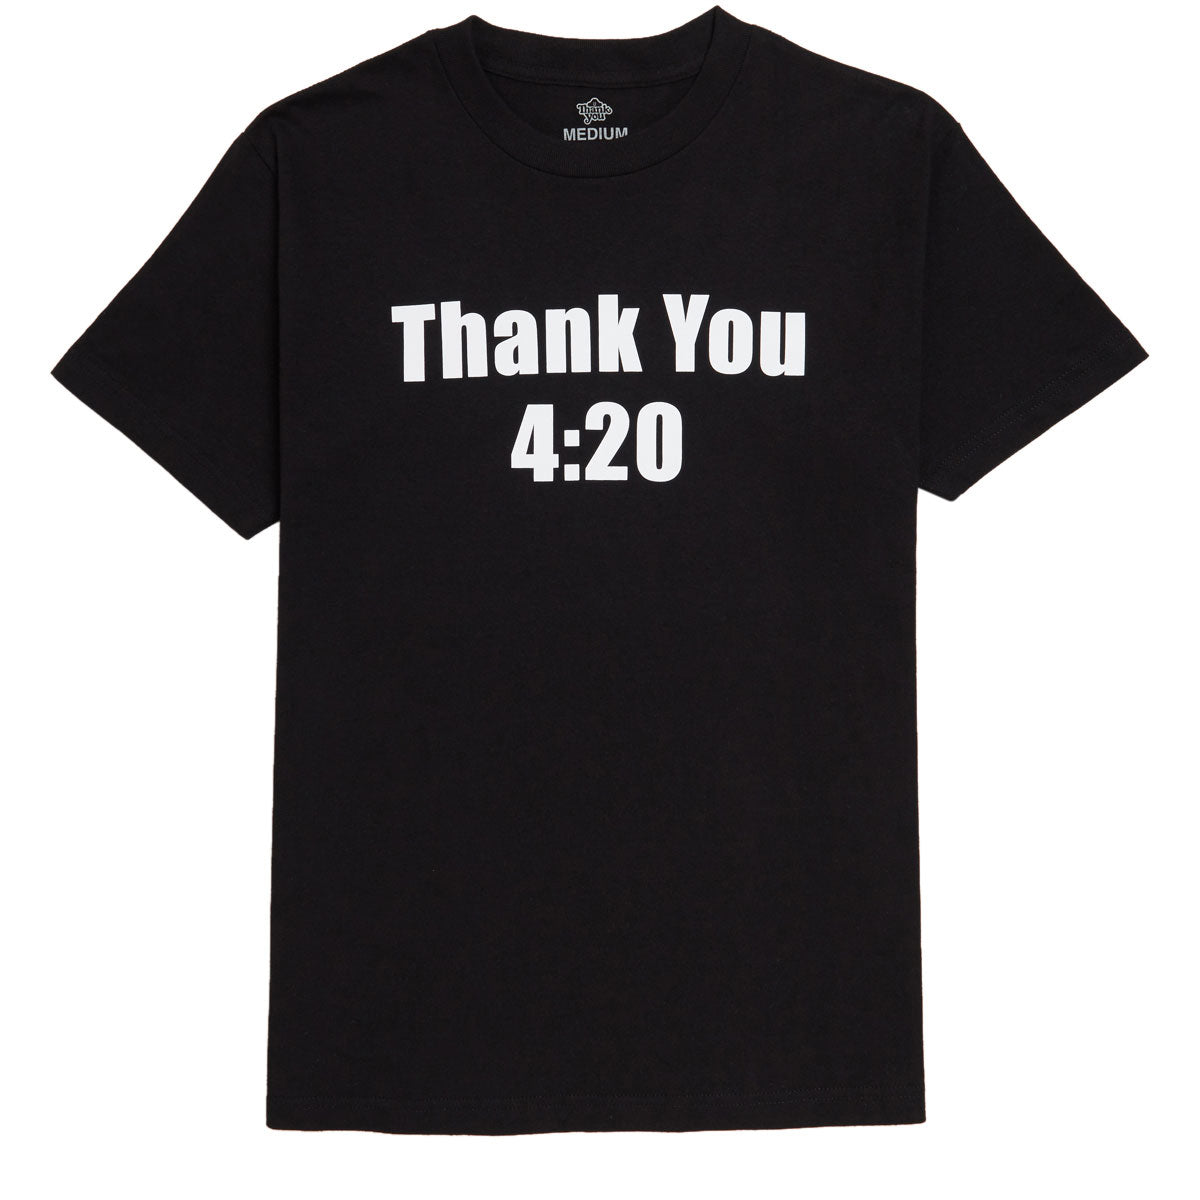 Thank You 420 T-Shirt - Black image 1